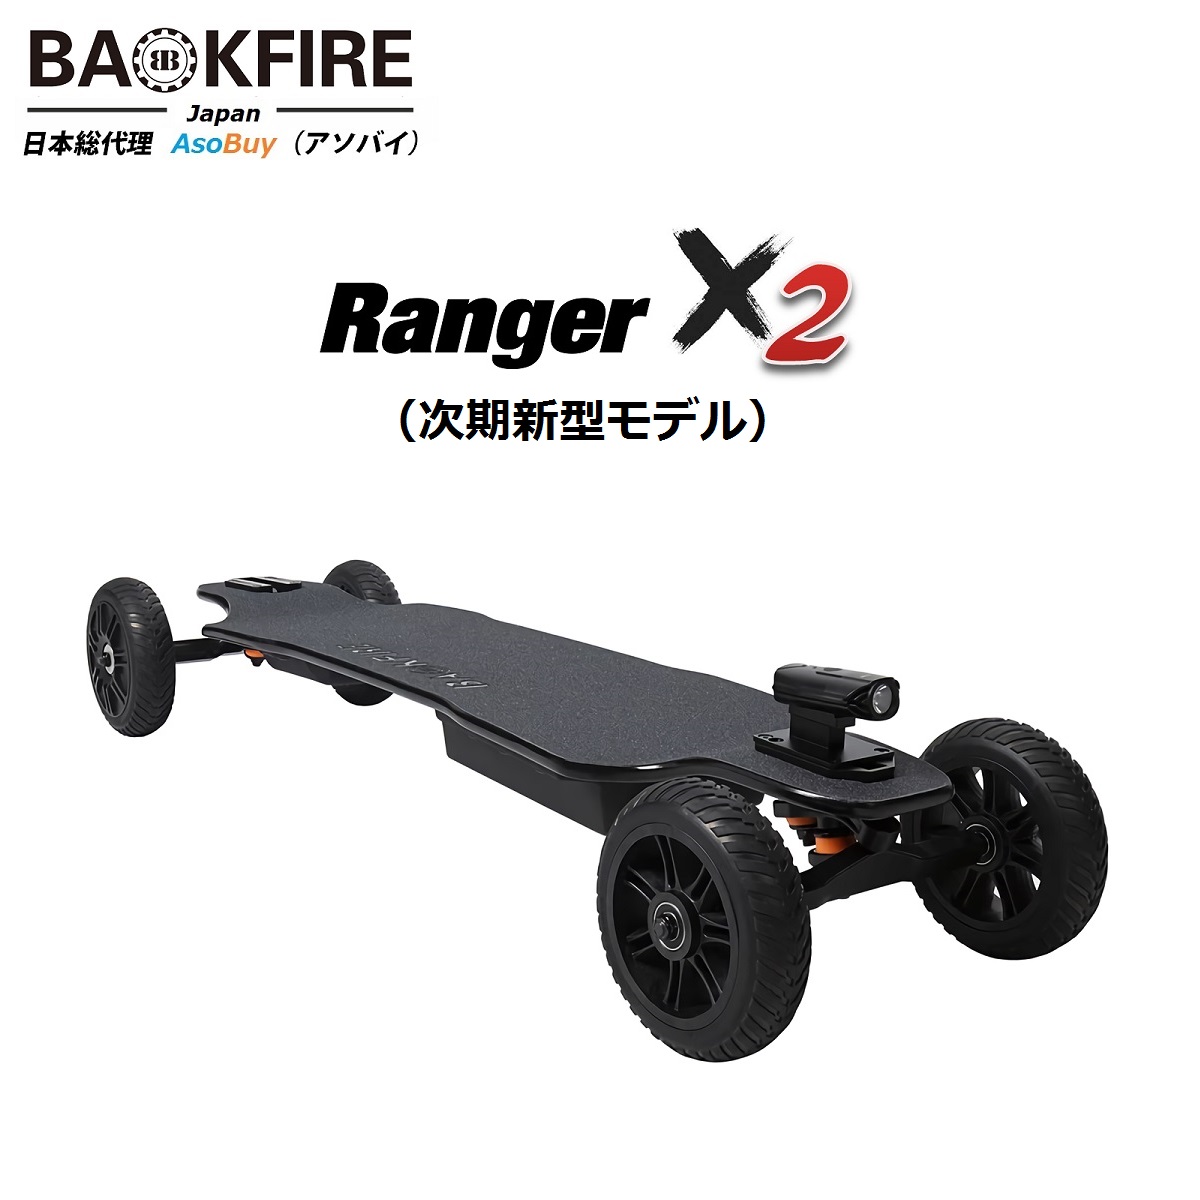 Backfire 独特な店 Ranger X3 全地形対応 プレミアムモデル 4A快速充電 第3世代 1500Wx2超高出力モーター搭載 電動スケートボード レンジャー オフロード モンスター級 バックファイヤー 限定タイムセール